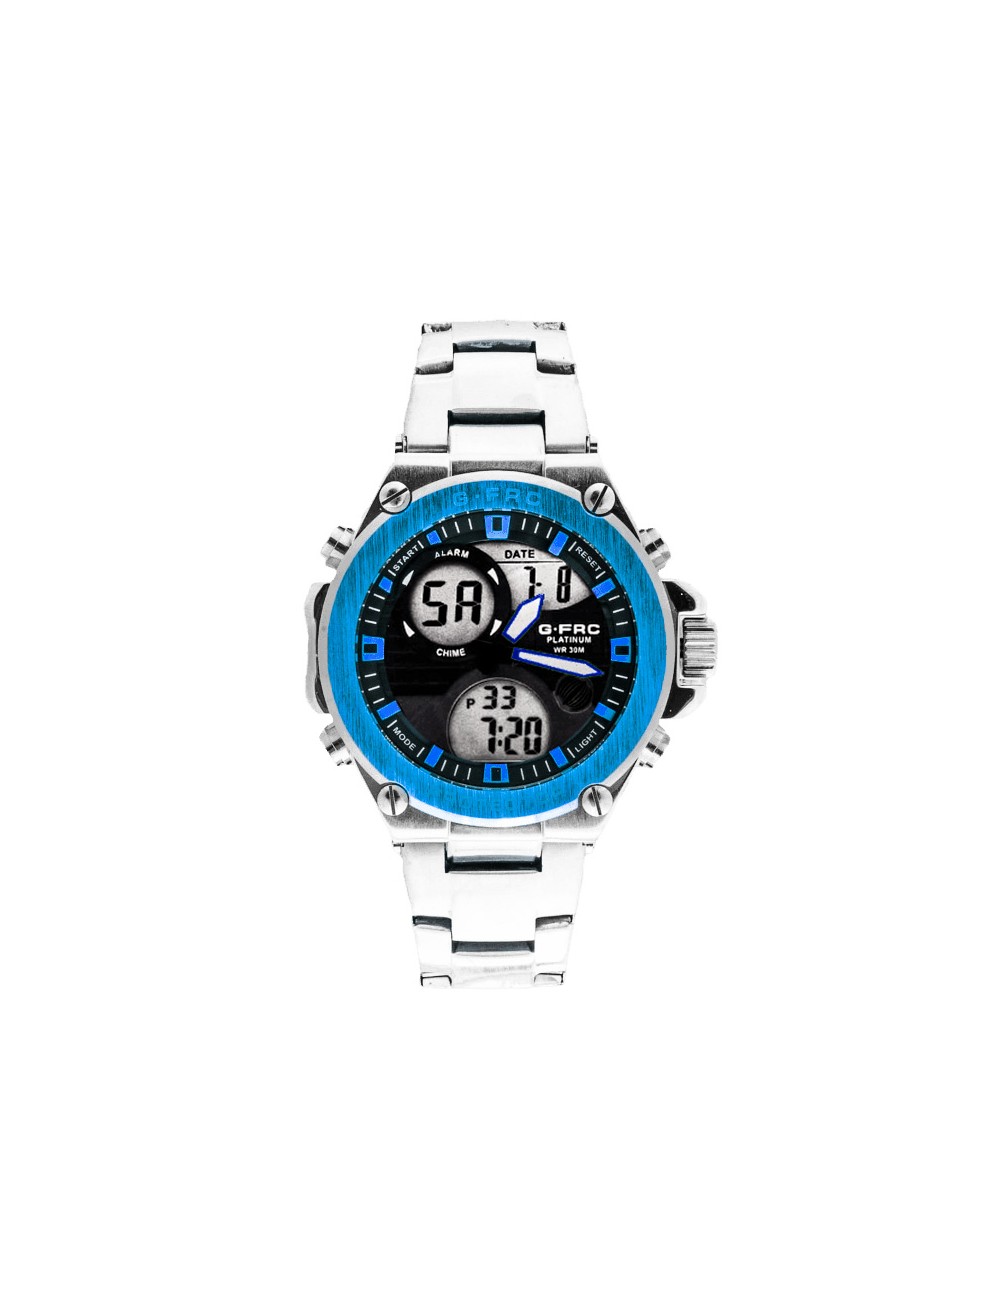 Reloj G-force Al165 159,900.00